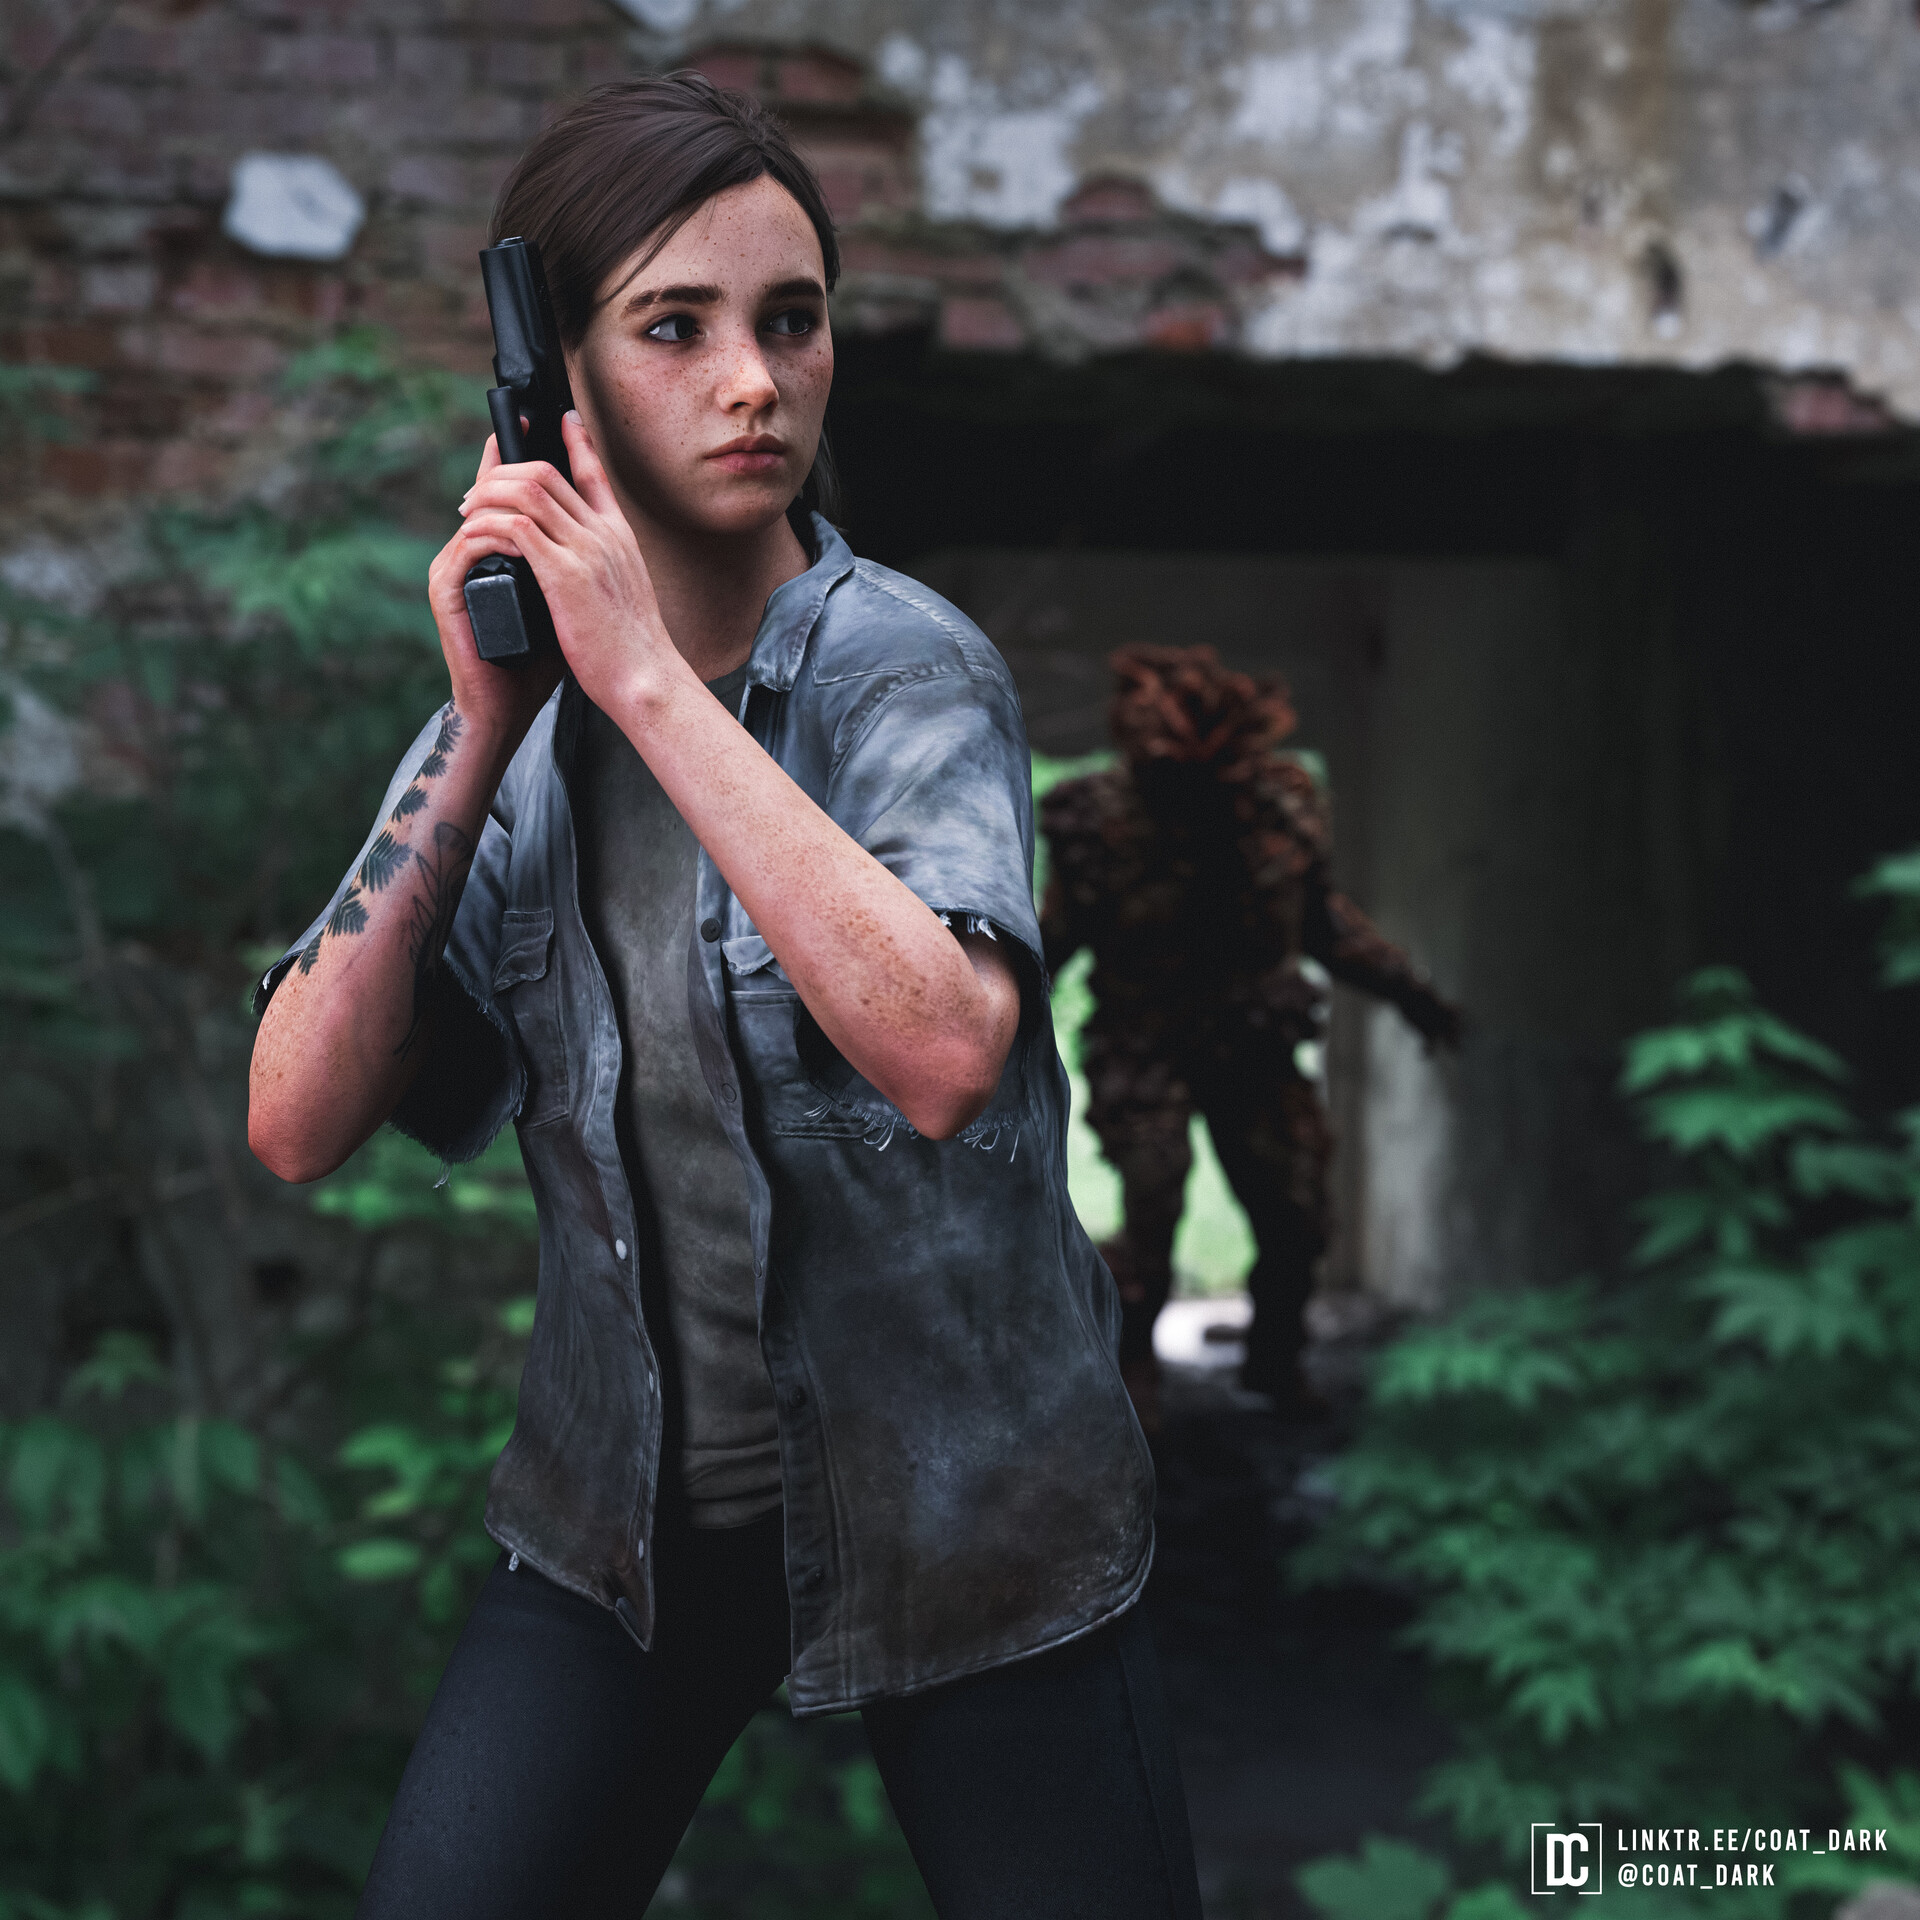 Ellie's tattoo from “The Last of Us 2” #thelastofus #thelastofus2